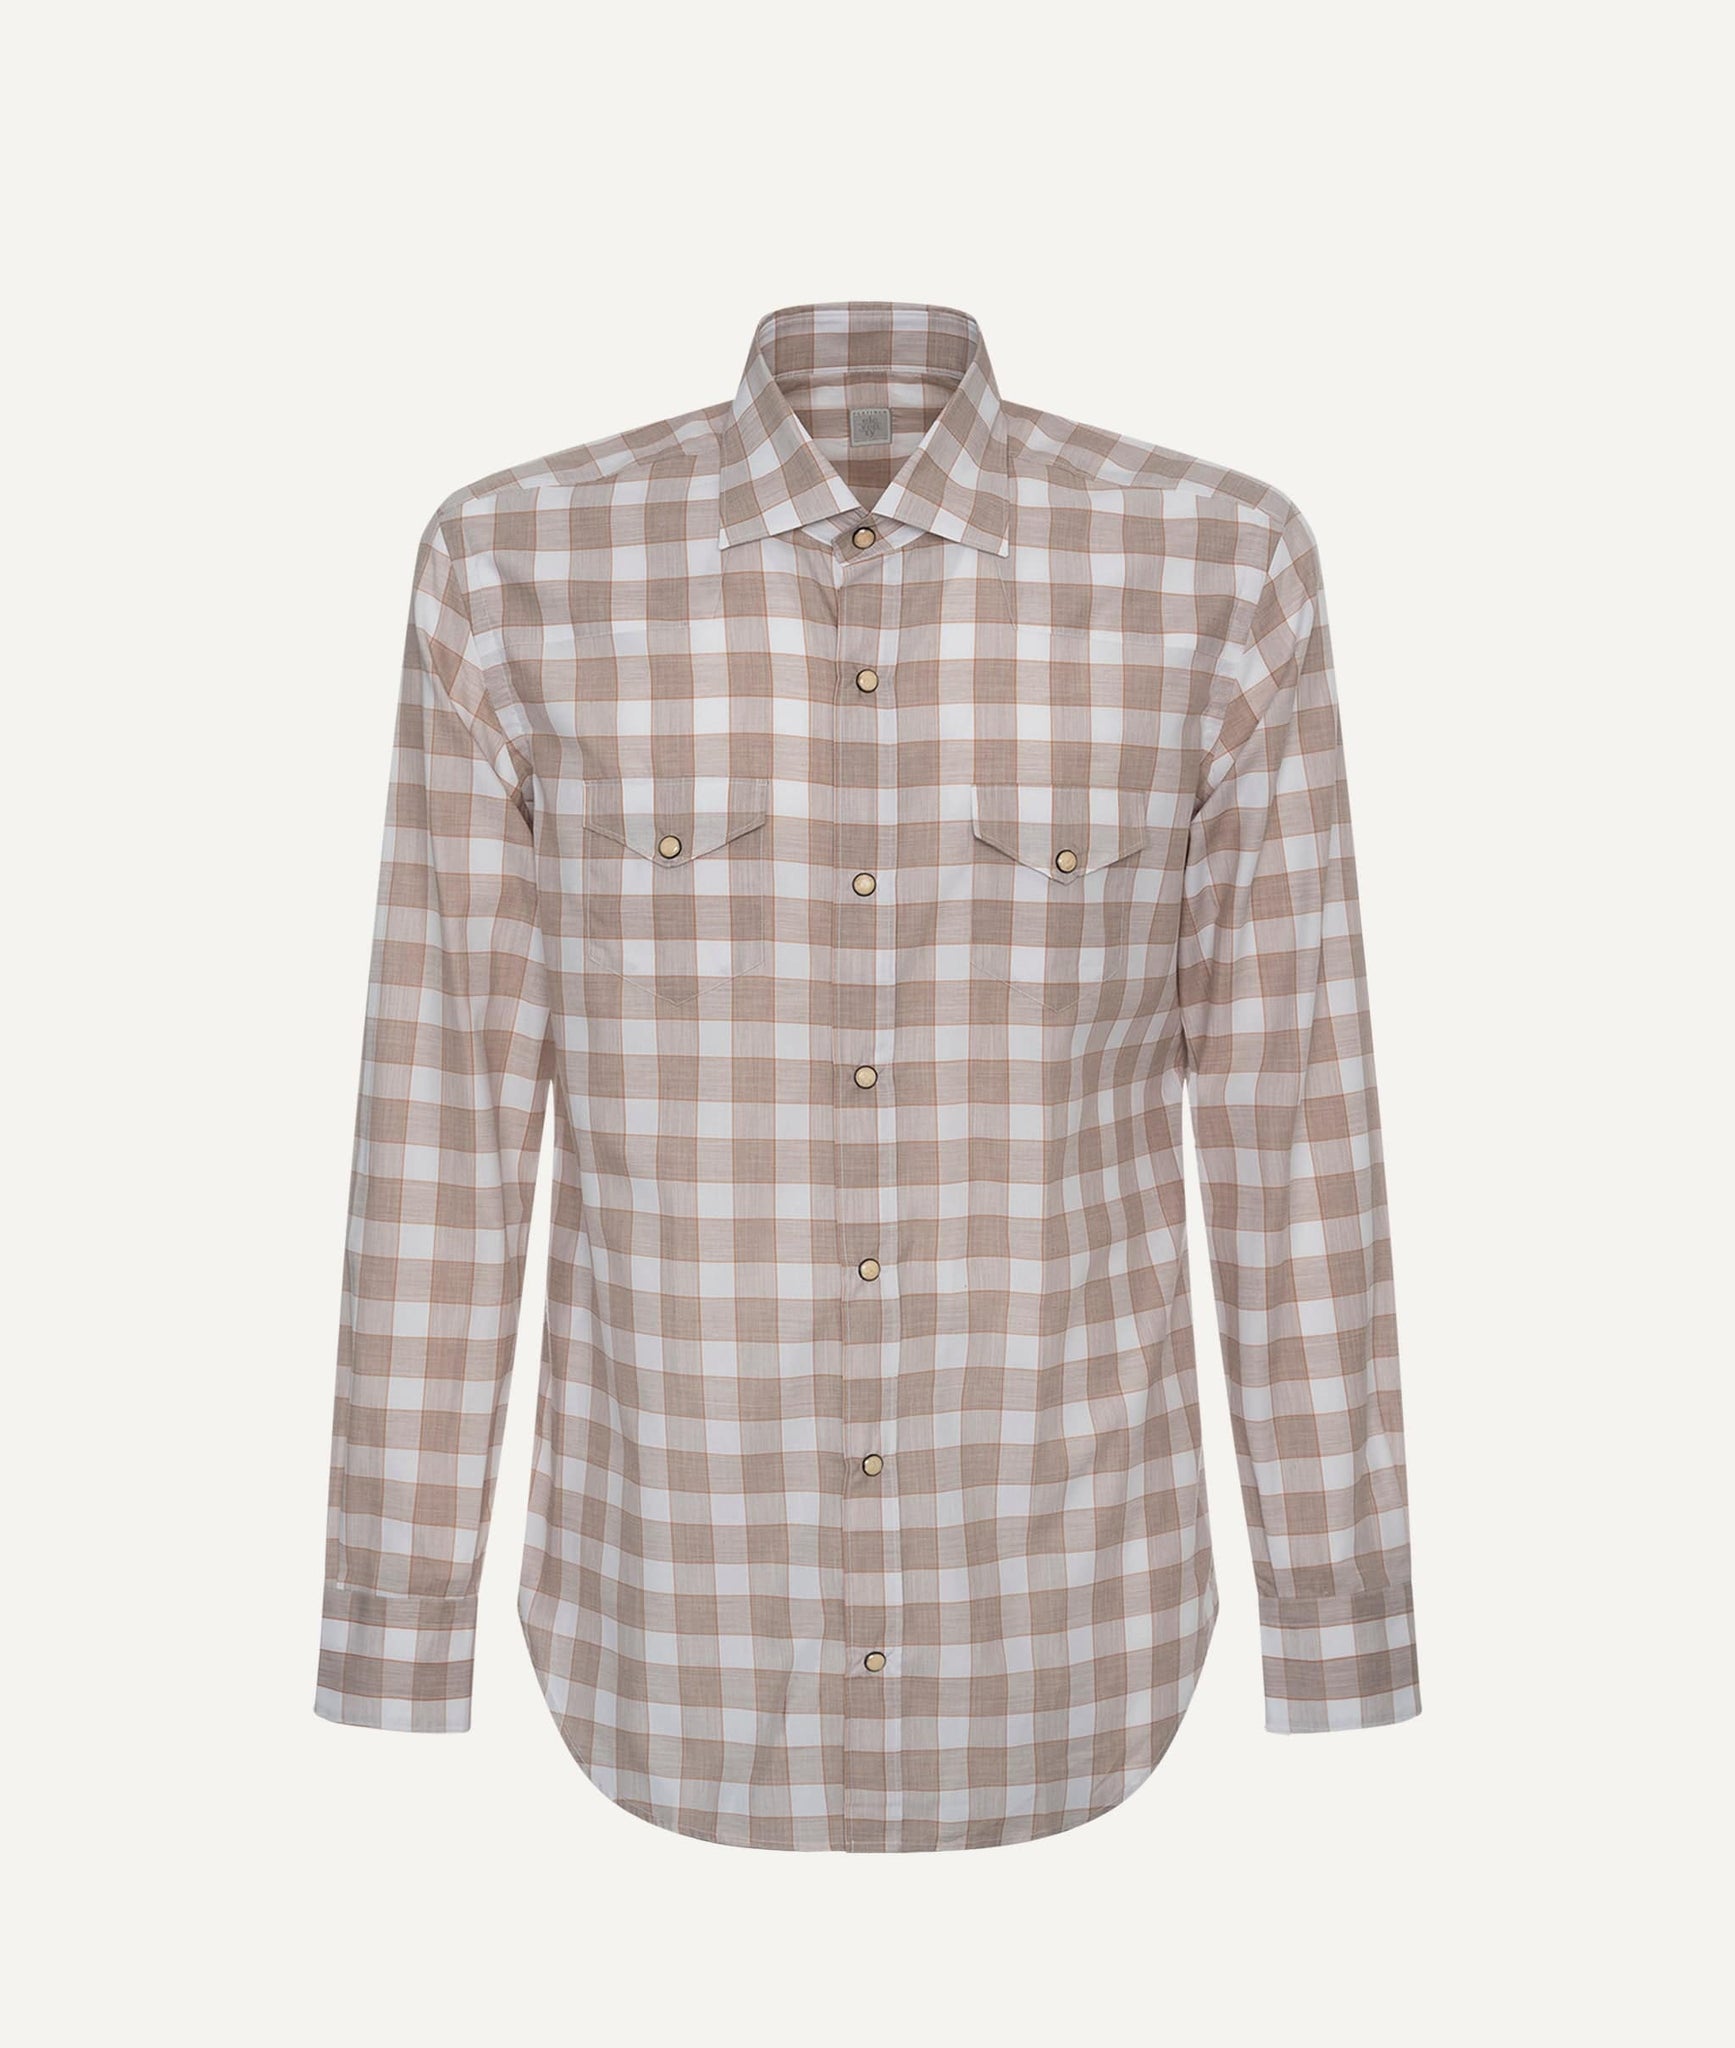 Eleventy - Checkered Shirt in Cotton